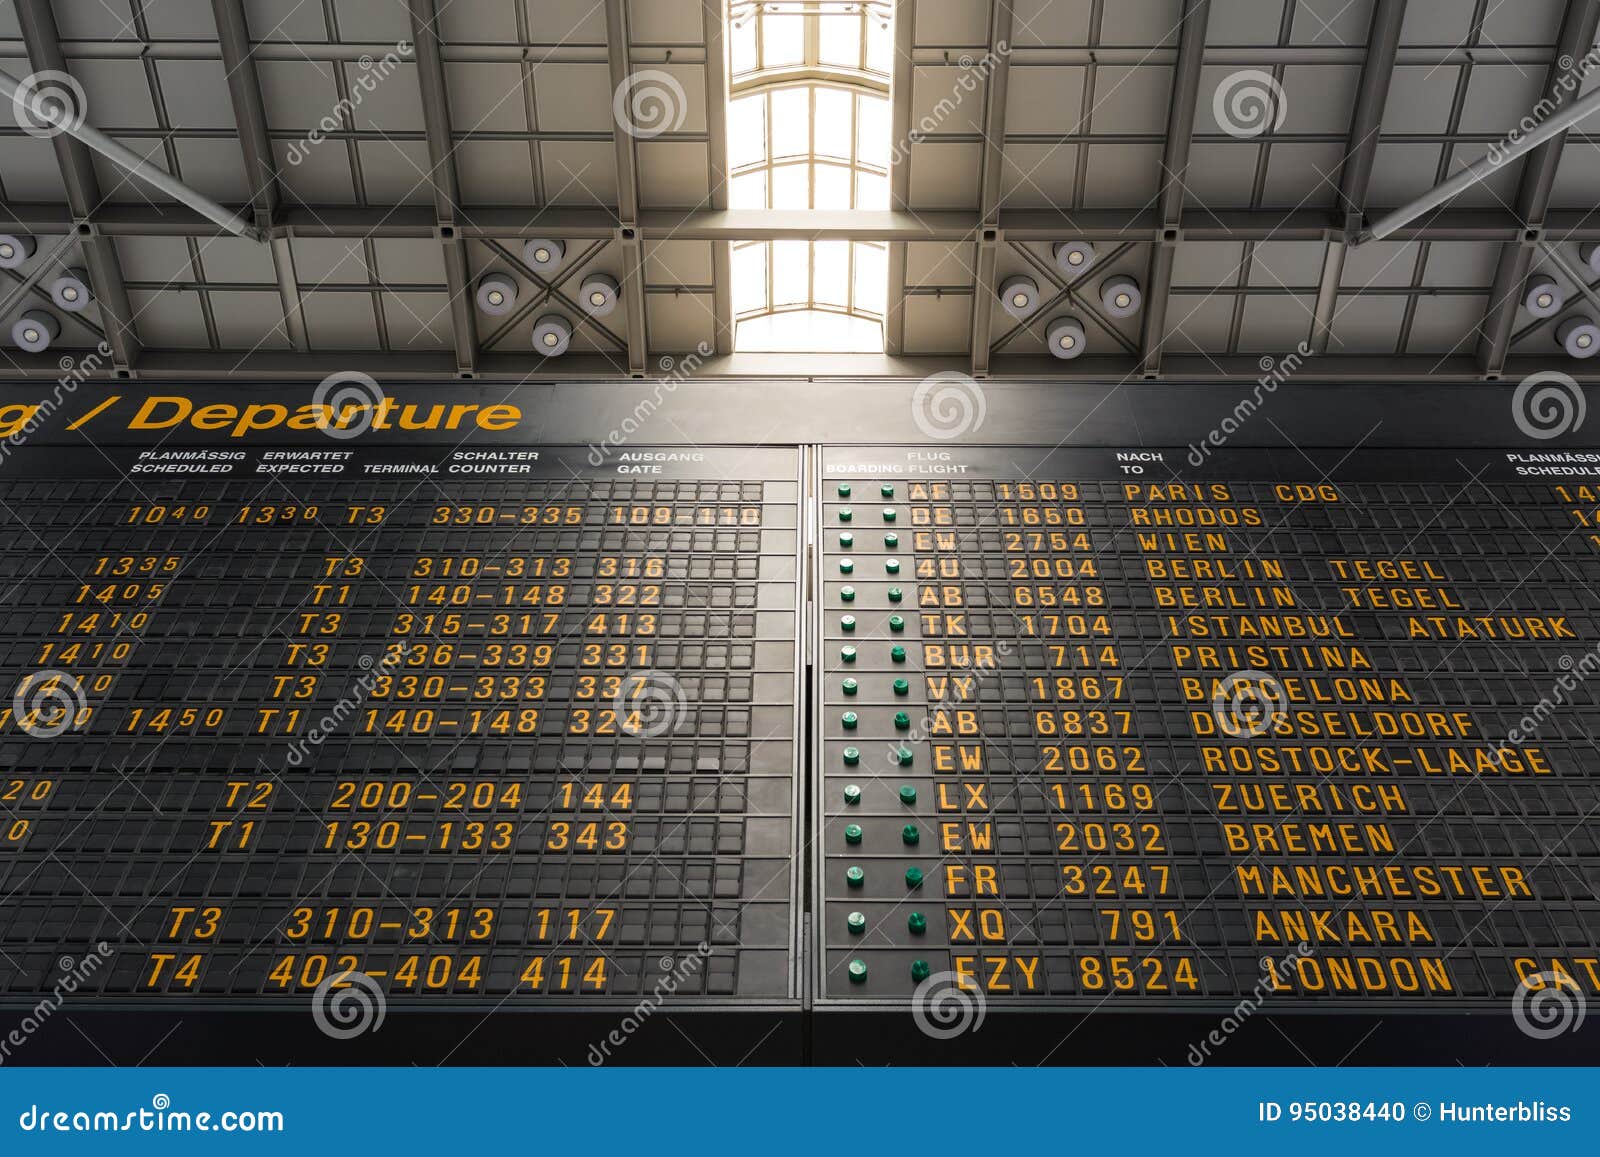 german airport abflug departures timetable schedule sign information